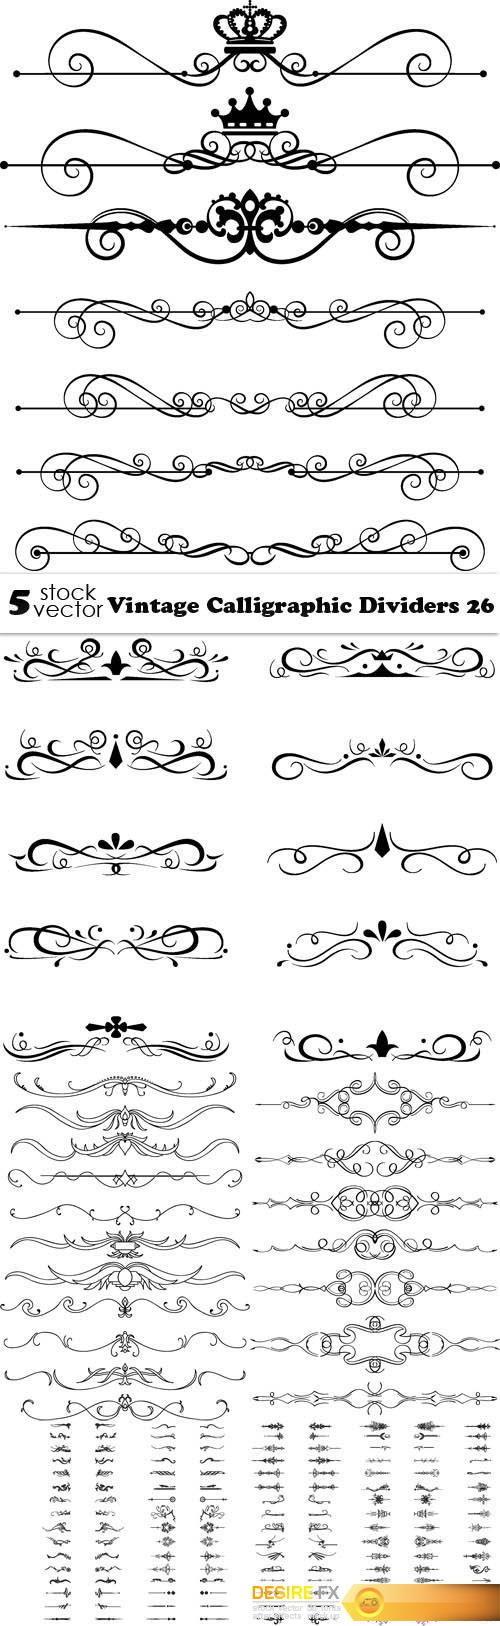 Vectors - Vintage Calligraphic Dividers 26